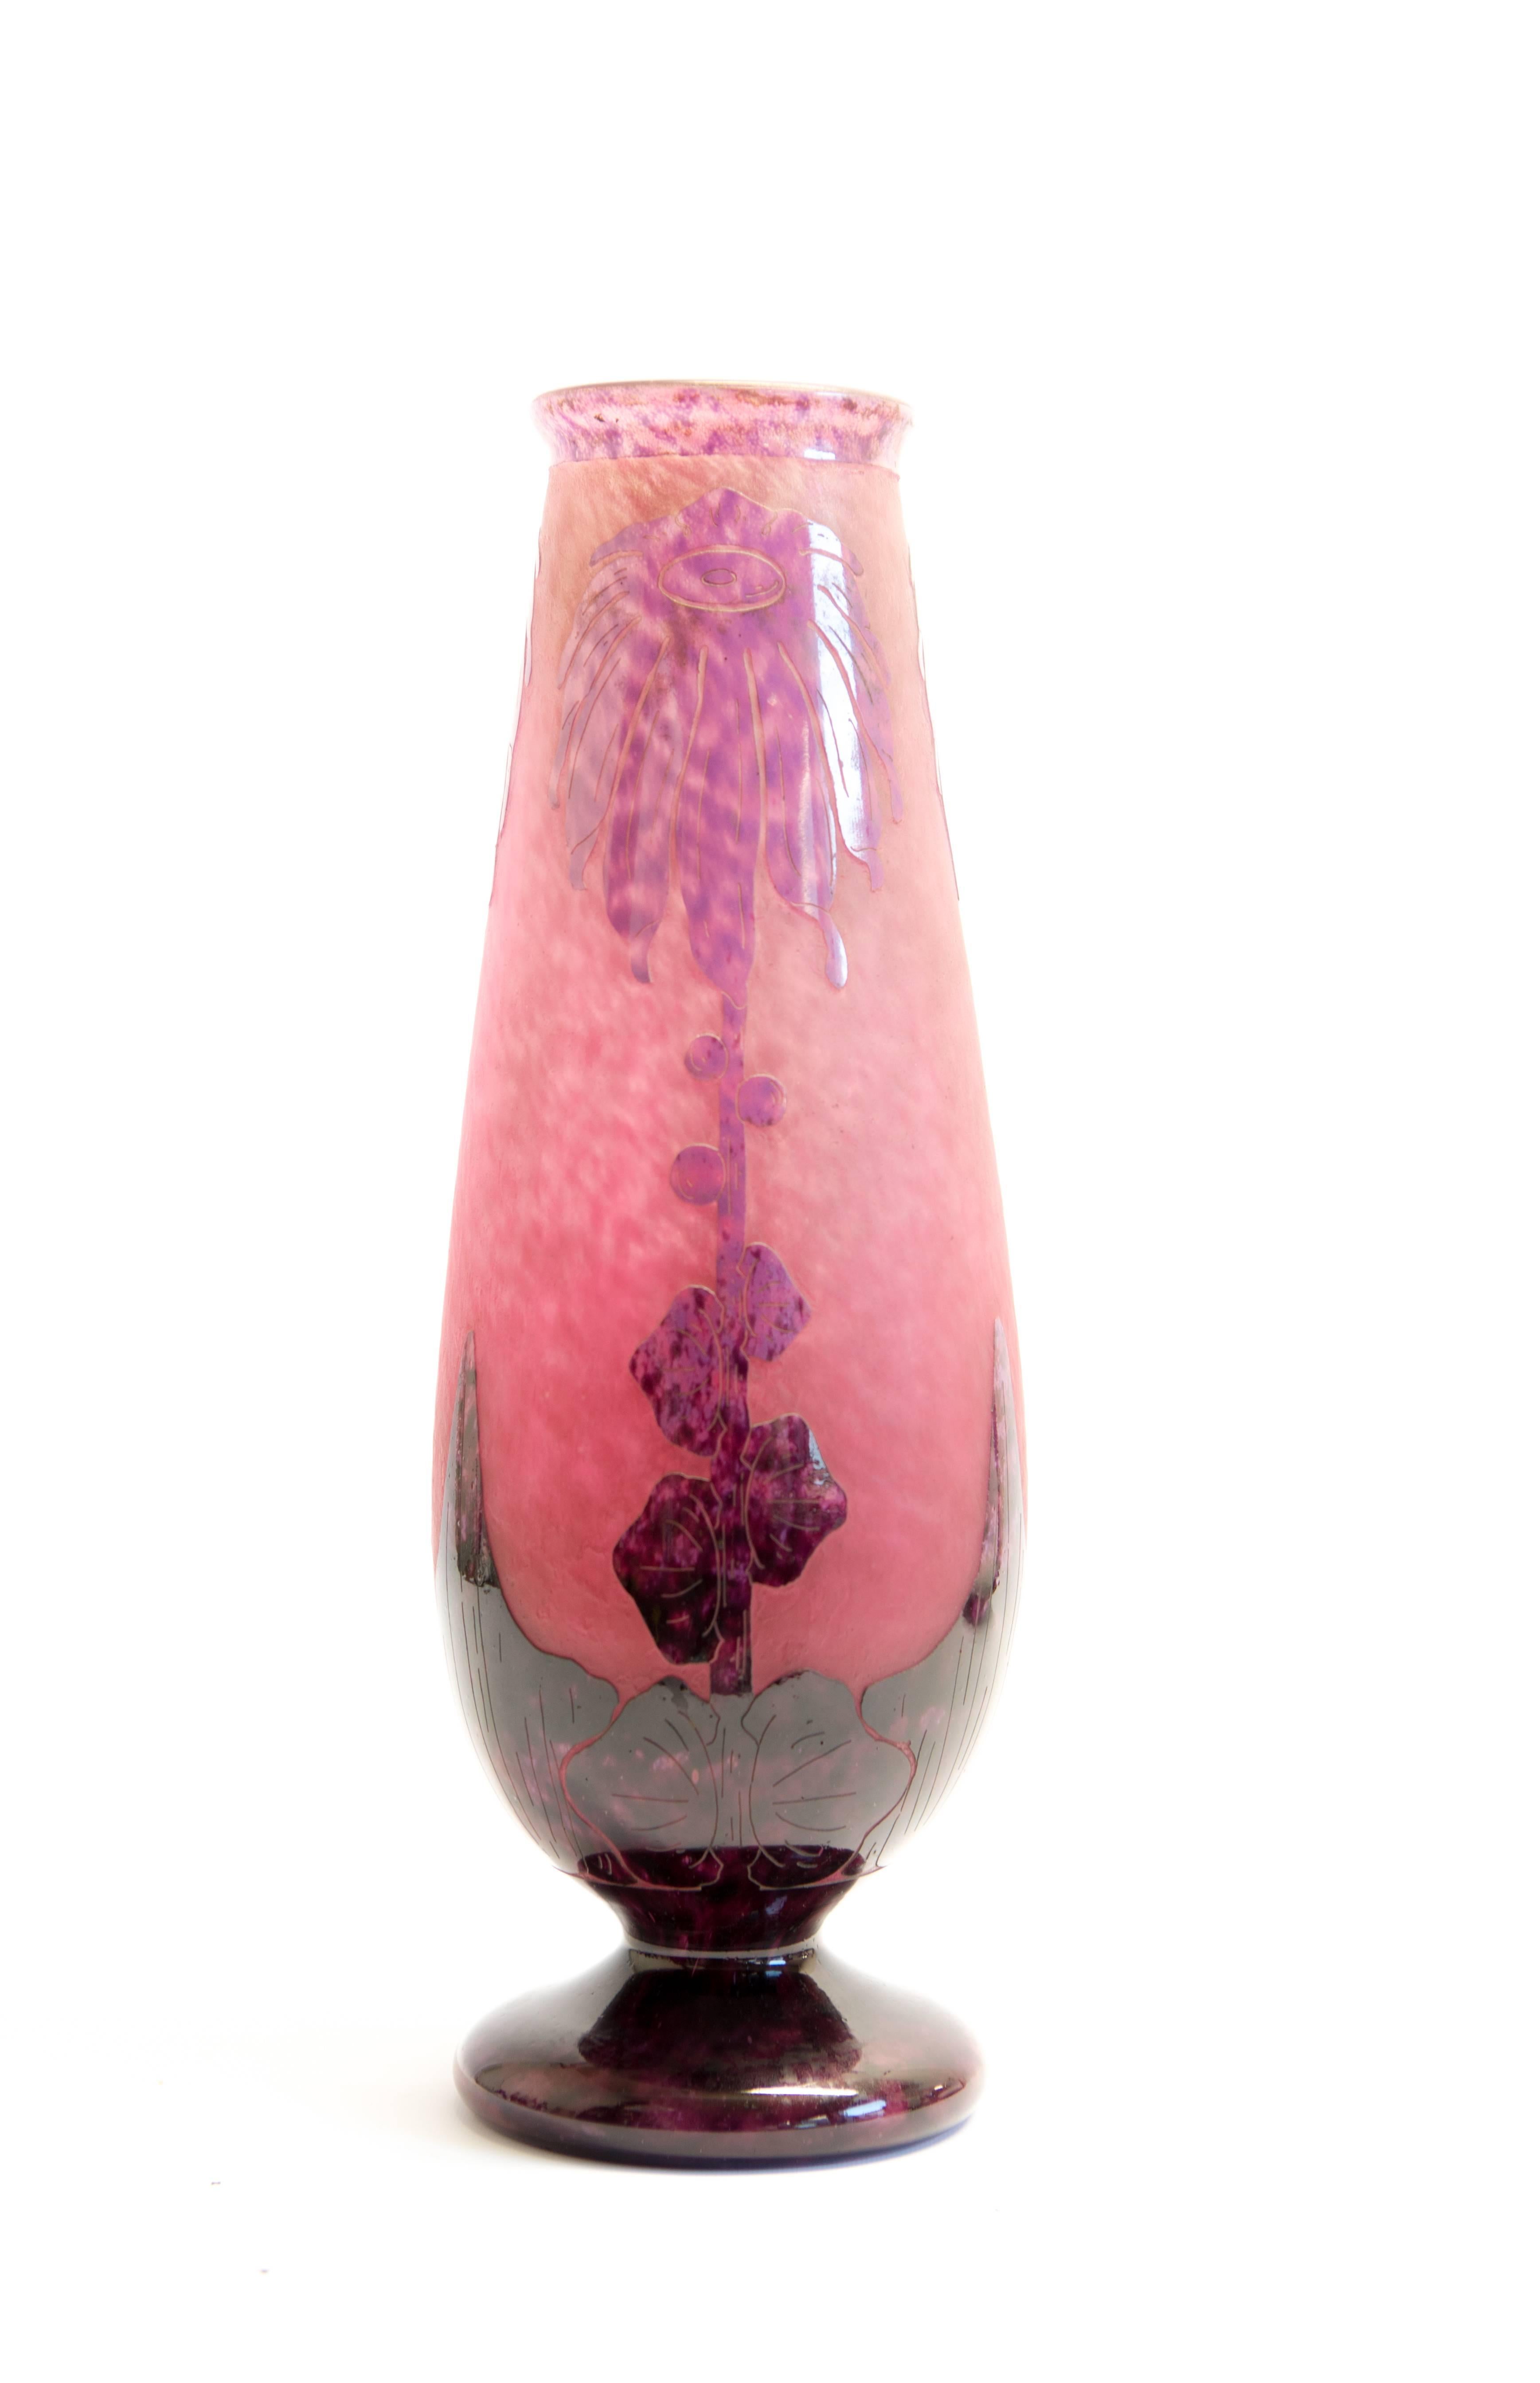 Verre Franc¸ais vase in purple hue. 

Made circa 1900 and signed 'Le Verre Franc¸ais'.
 